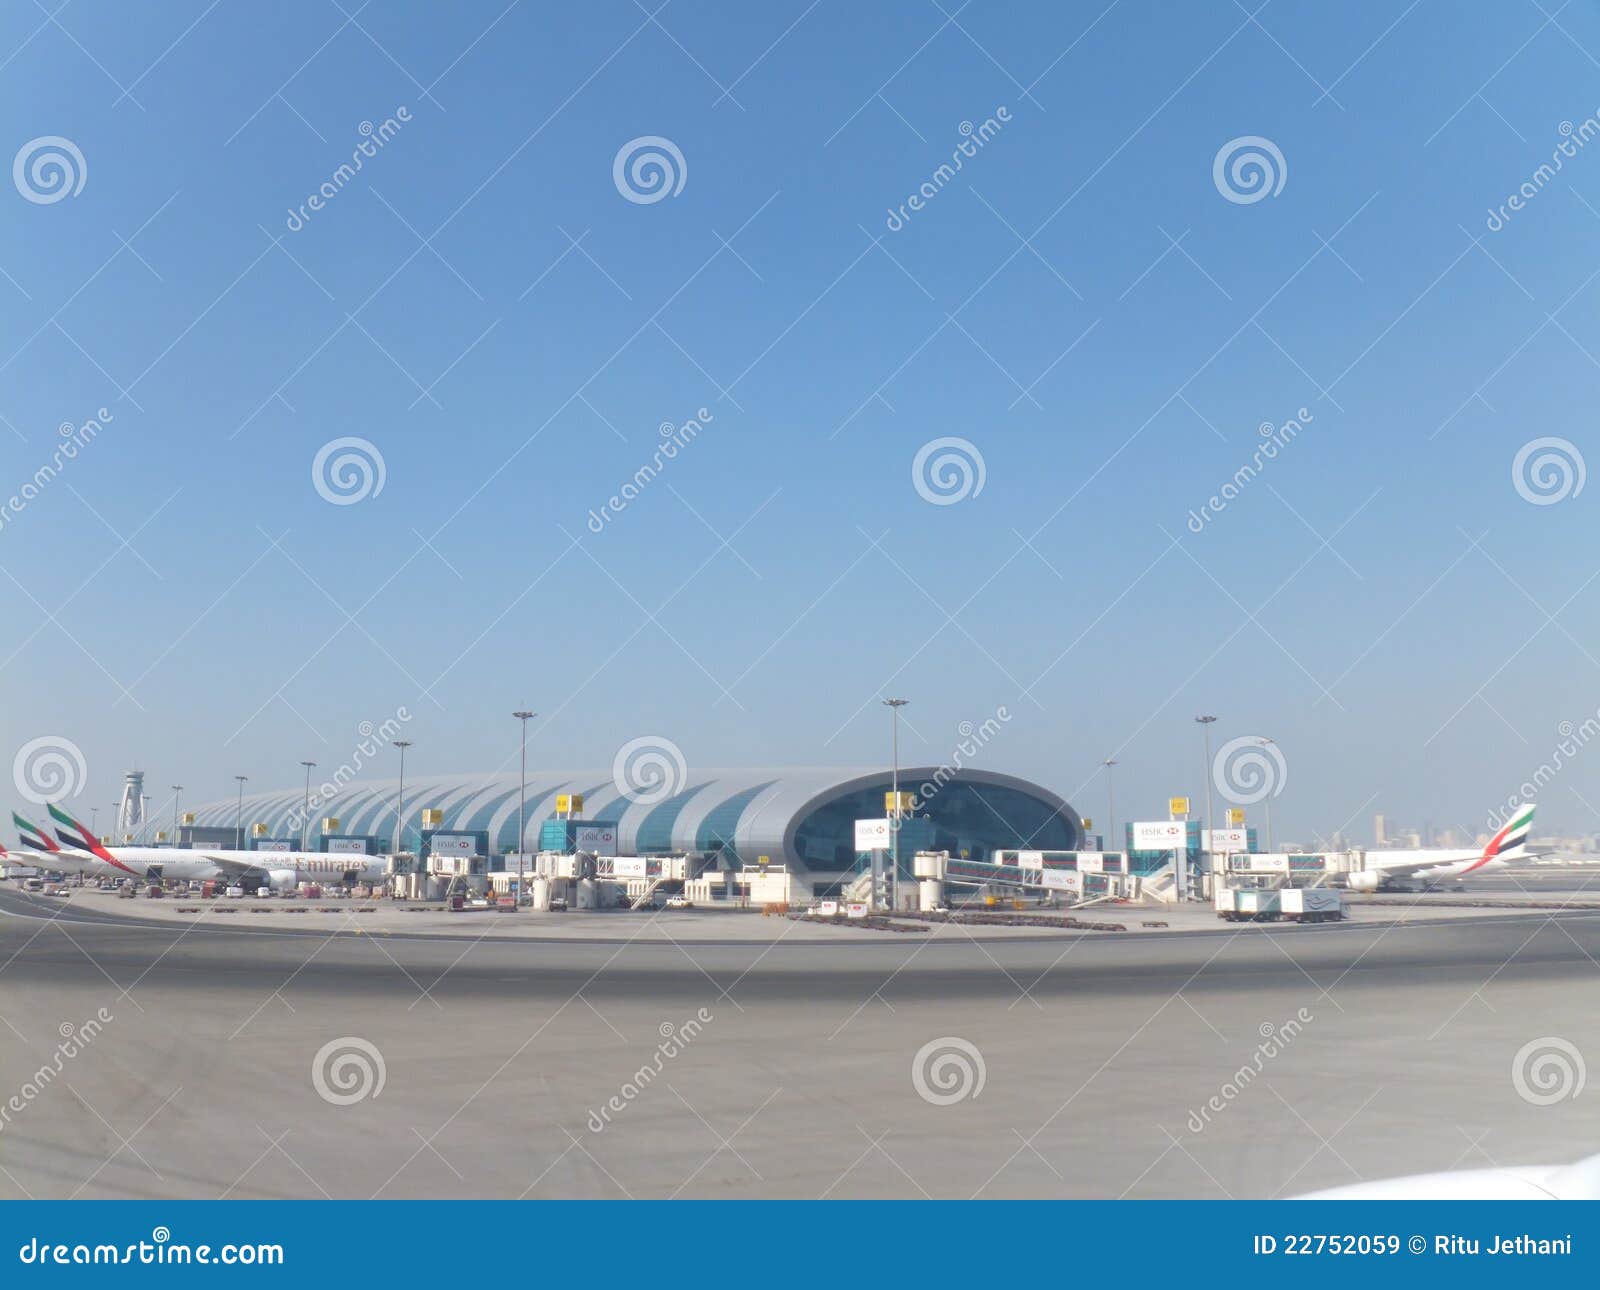 Emirates Airlines Terminal At Dubai International Airport